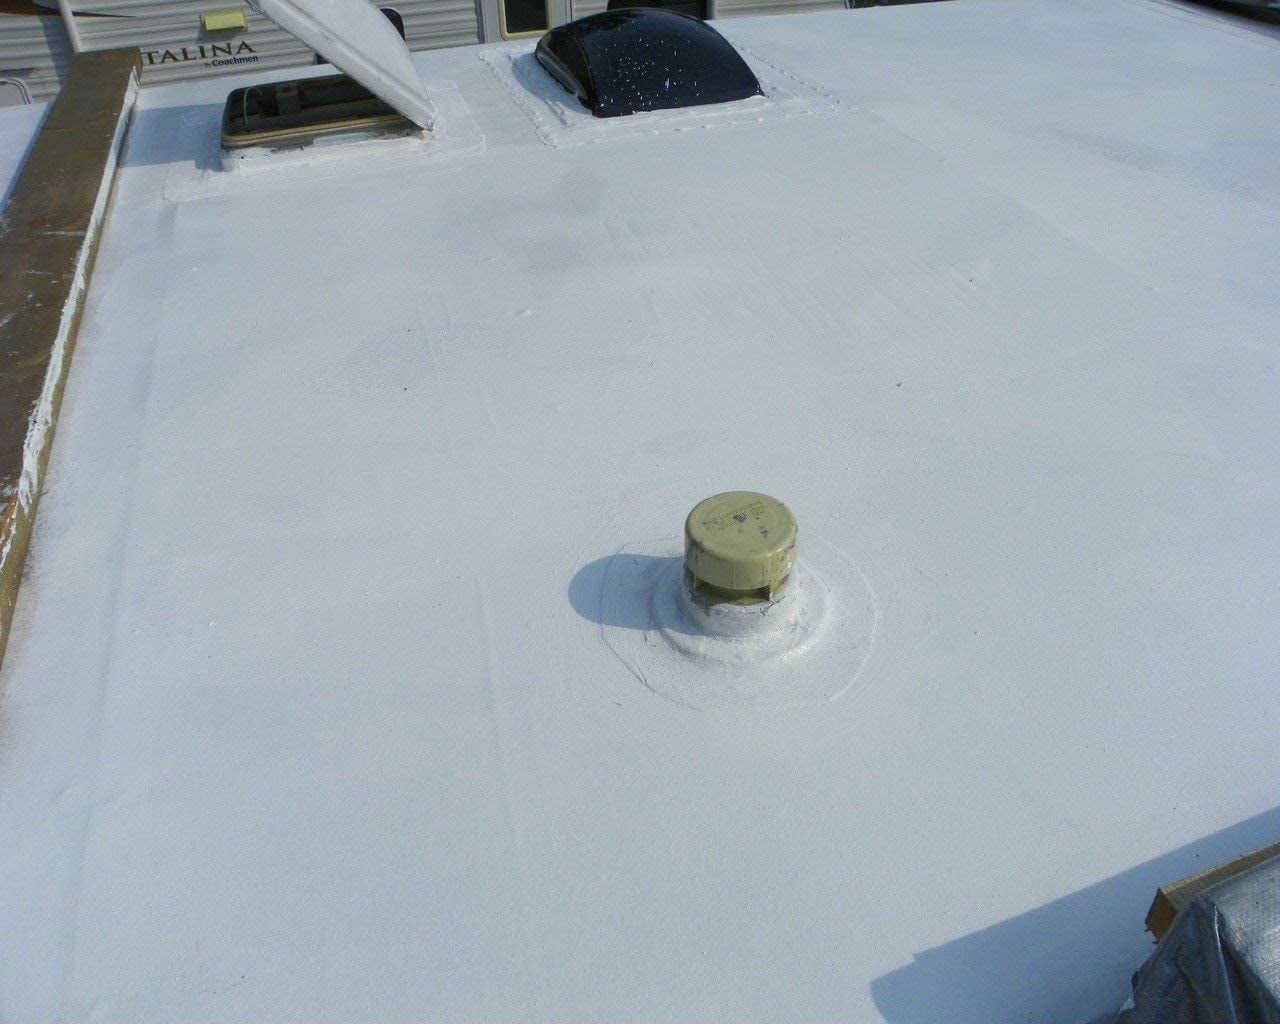 Liquid Rubber RV Roof Coating - Solar Reflective Sealant